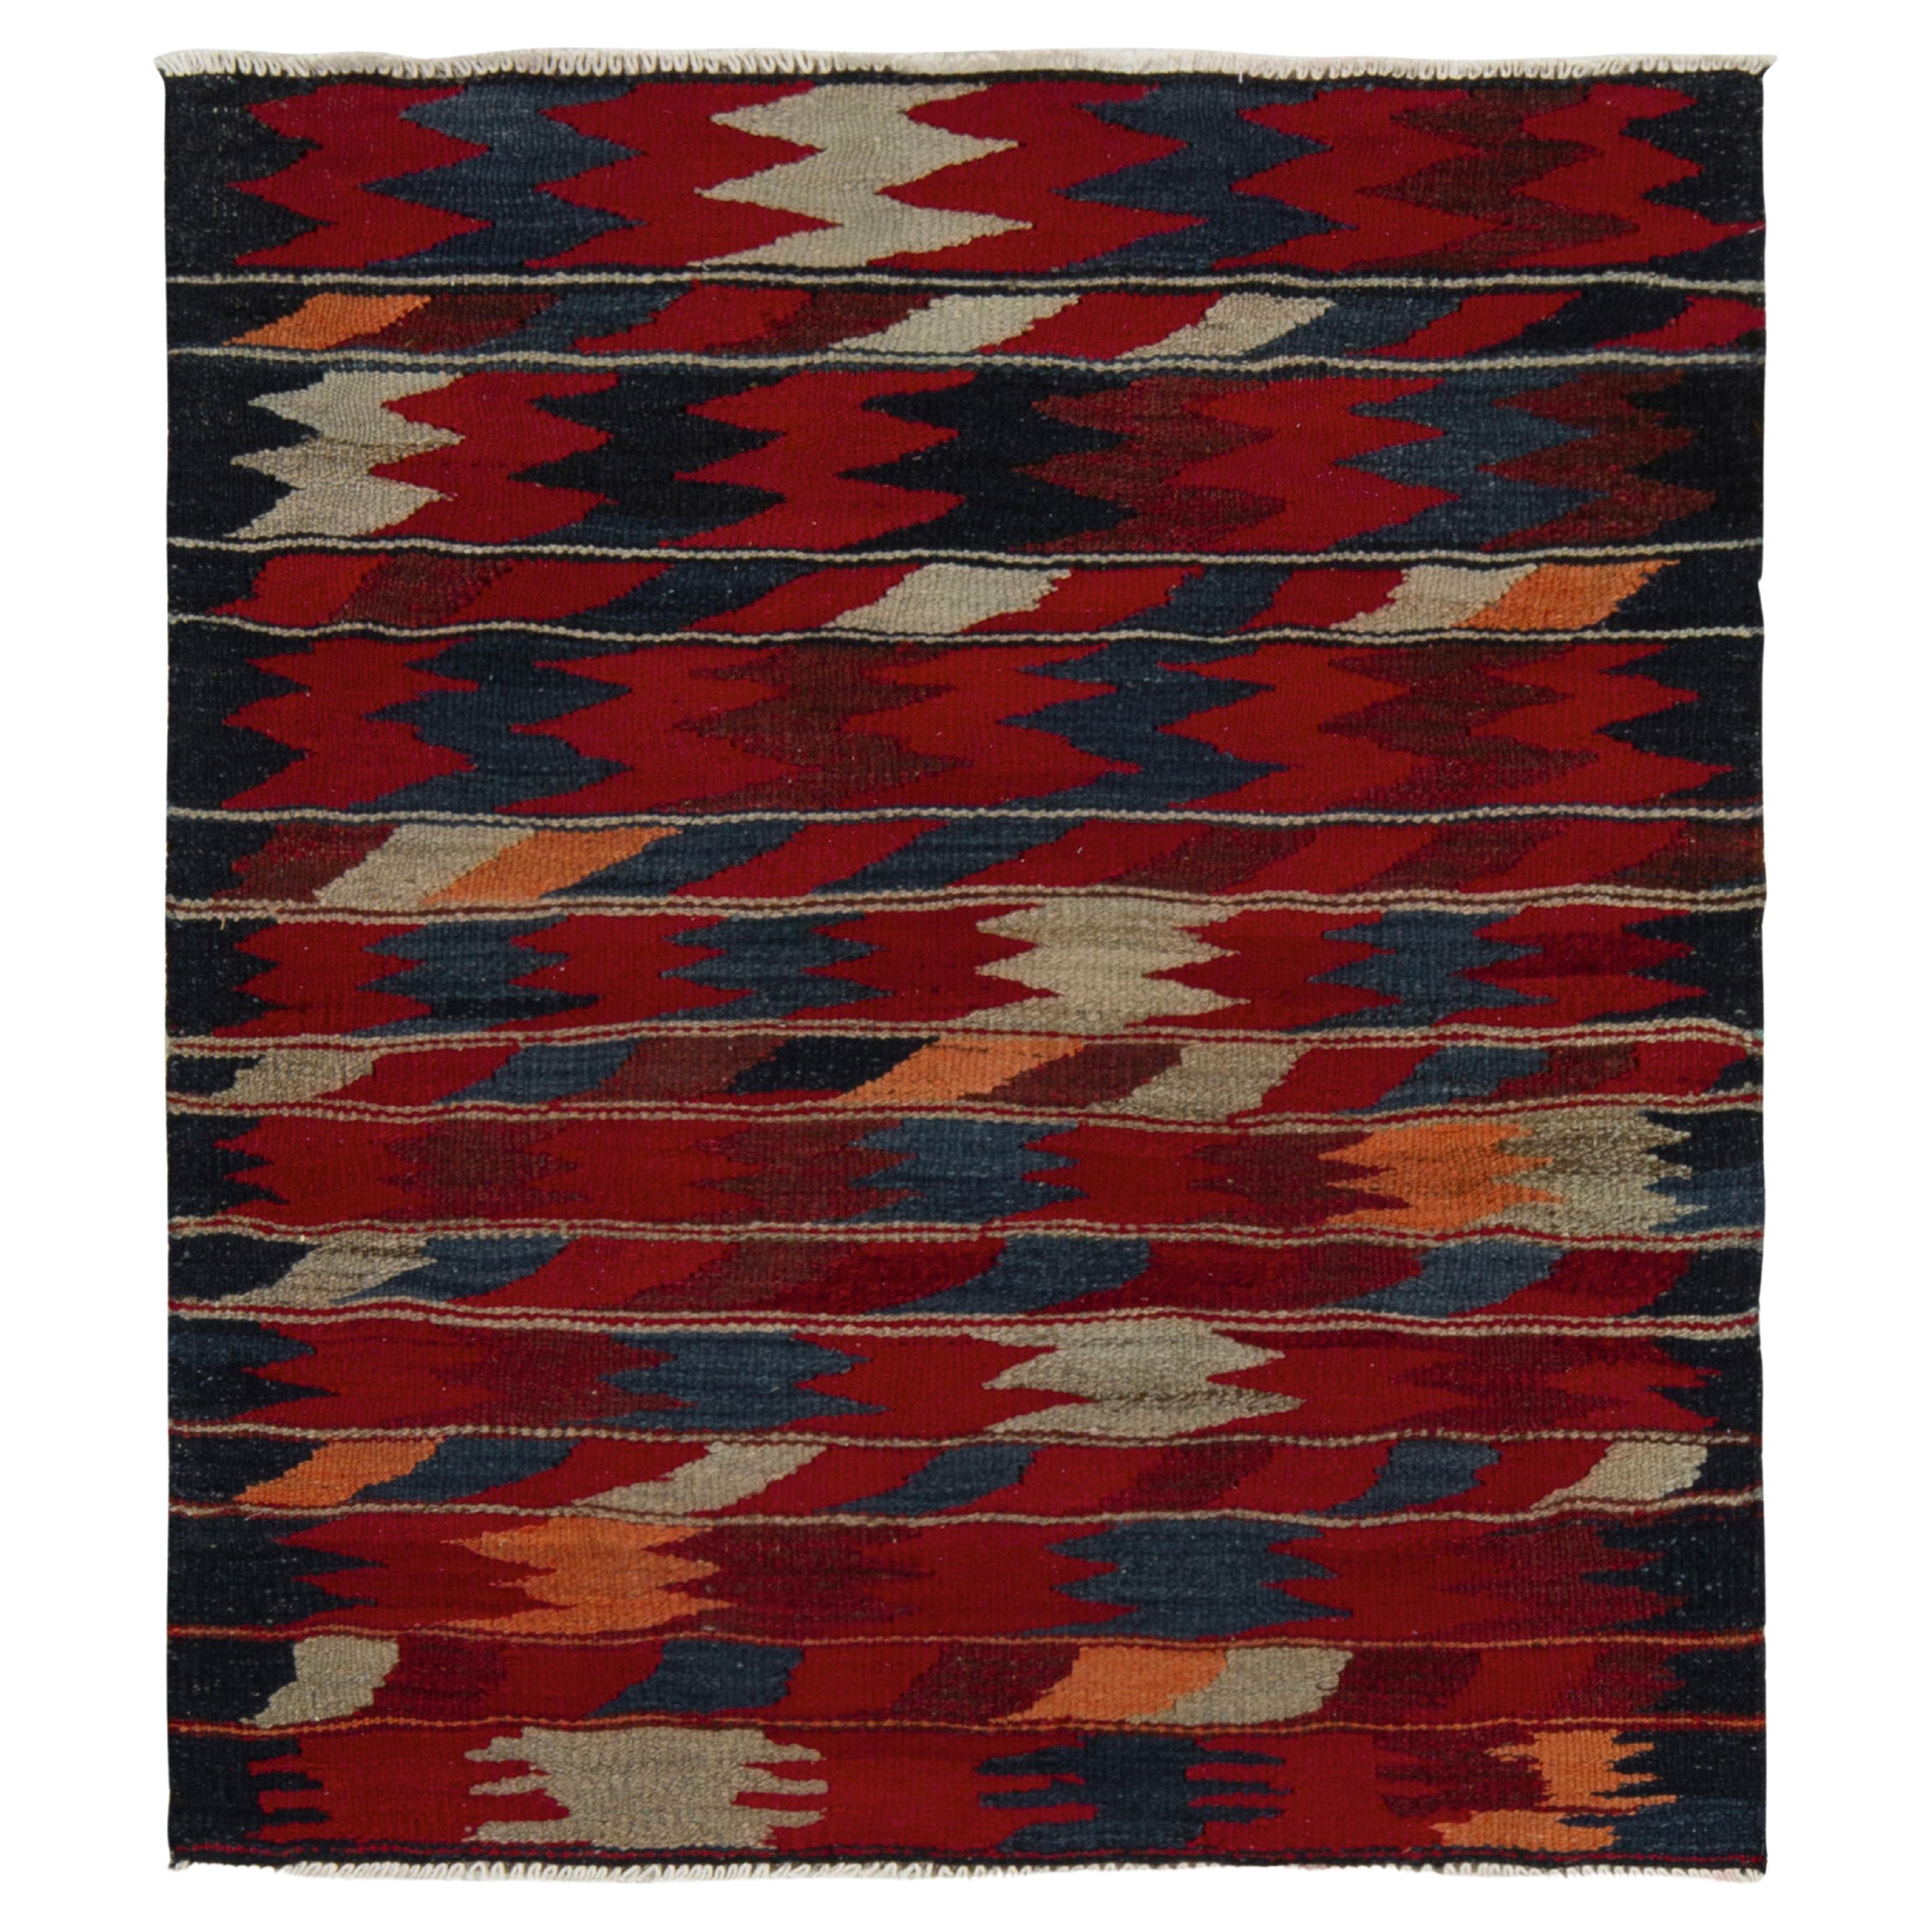 Vintage Sofreh Kilim Rug in Red, Blue, Colorful Geometric Pattern by Rug & Kilim